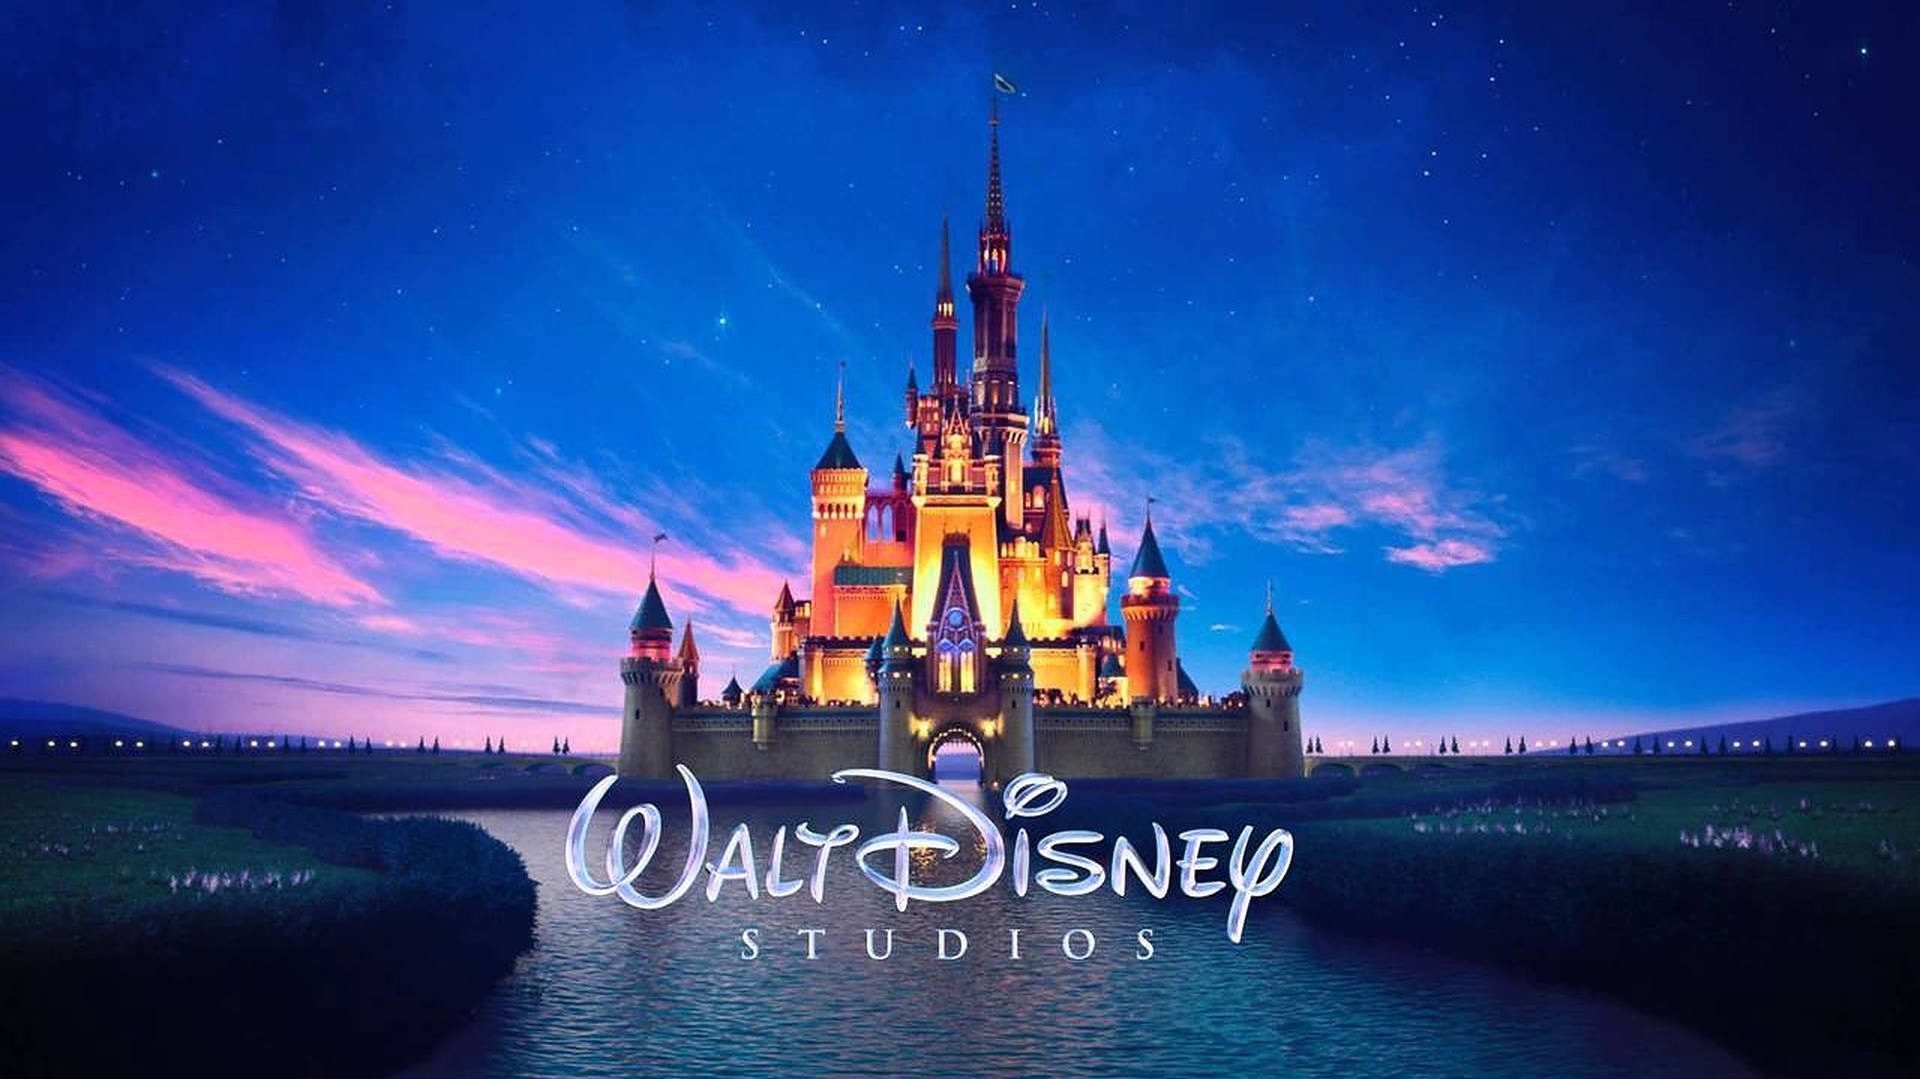 Free Disney Logo Wallpaper Downloads, [100+] Disney Logo Wallpapers for  FREE 